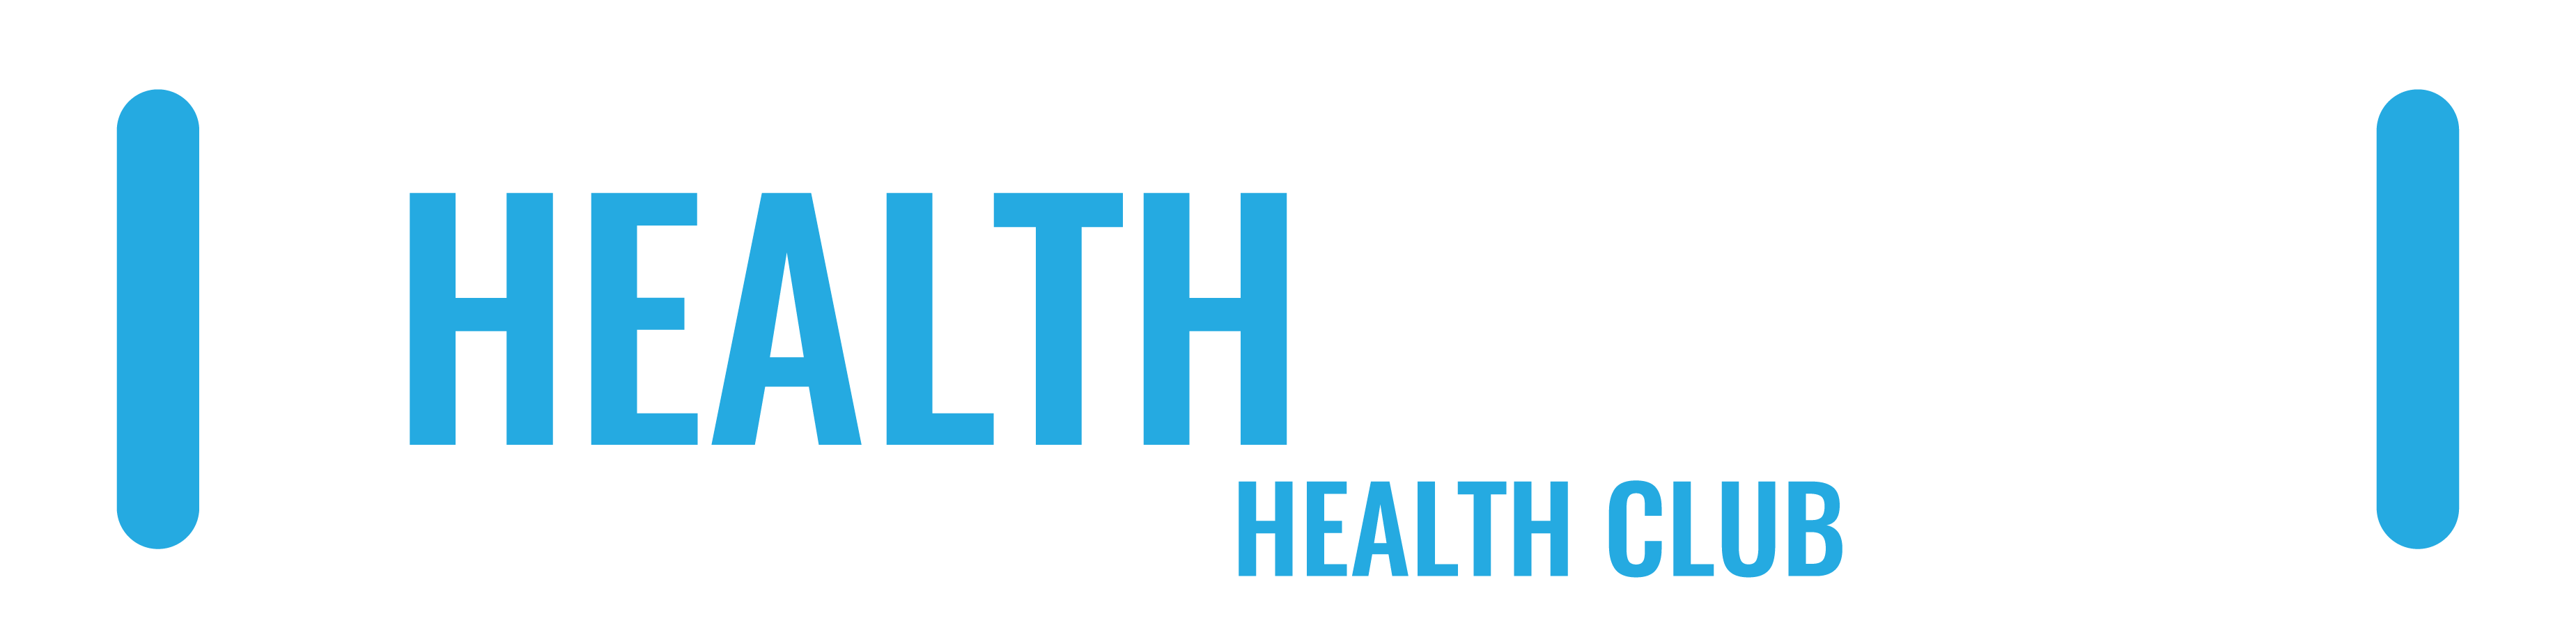 Healthworld